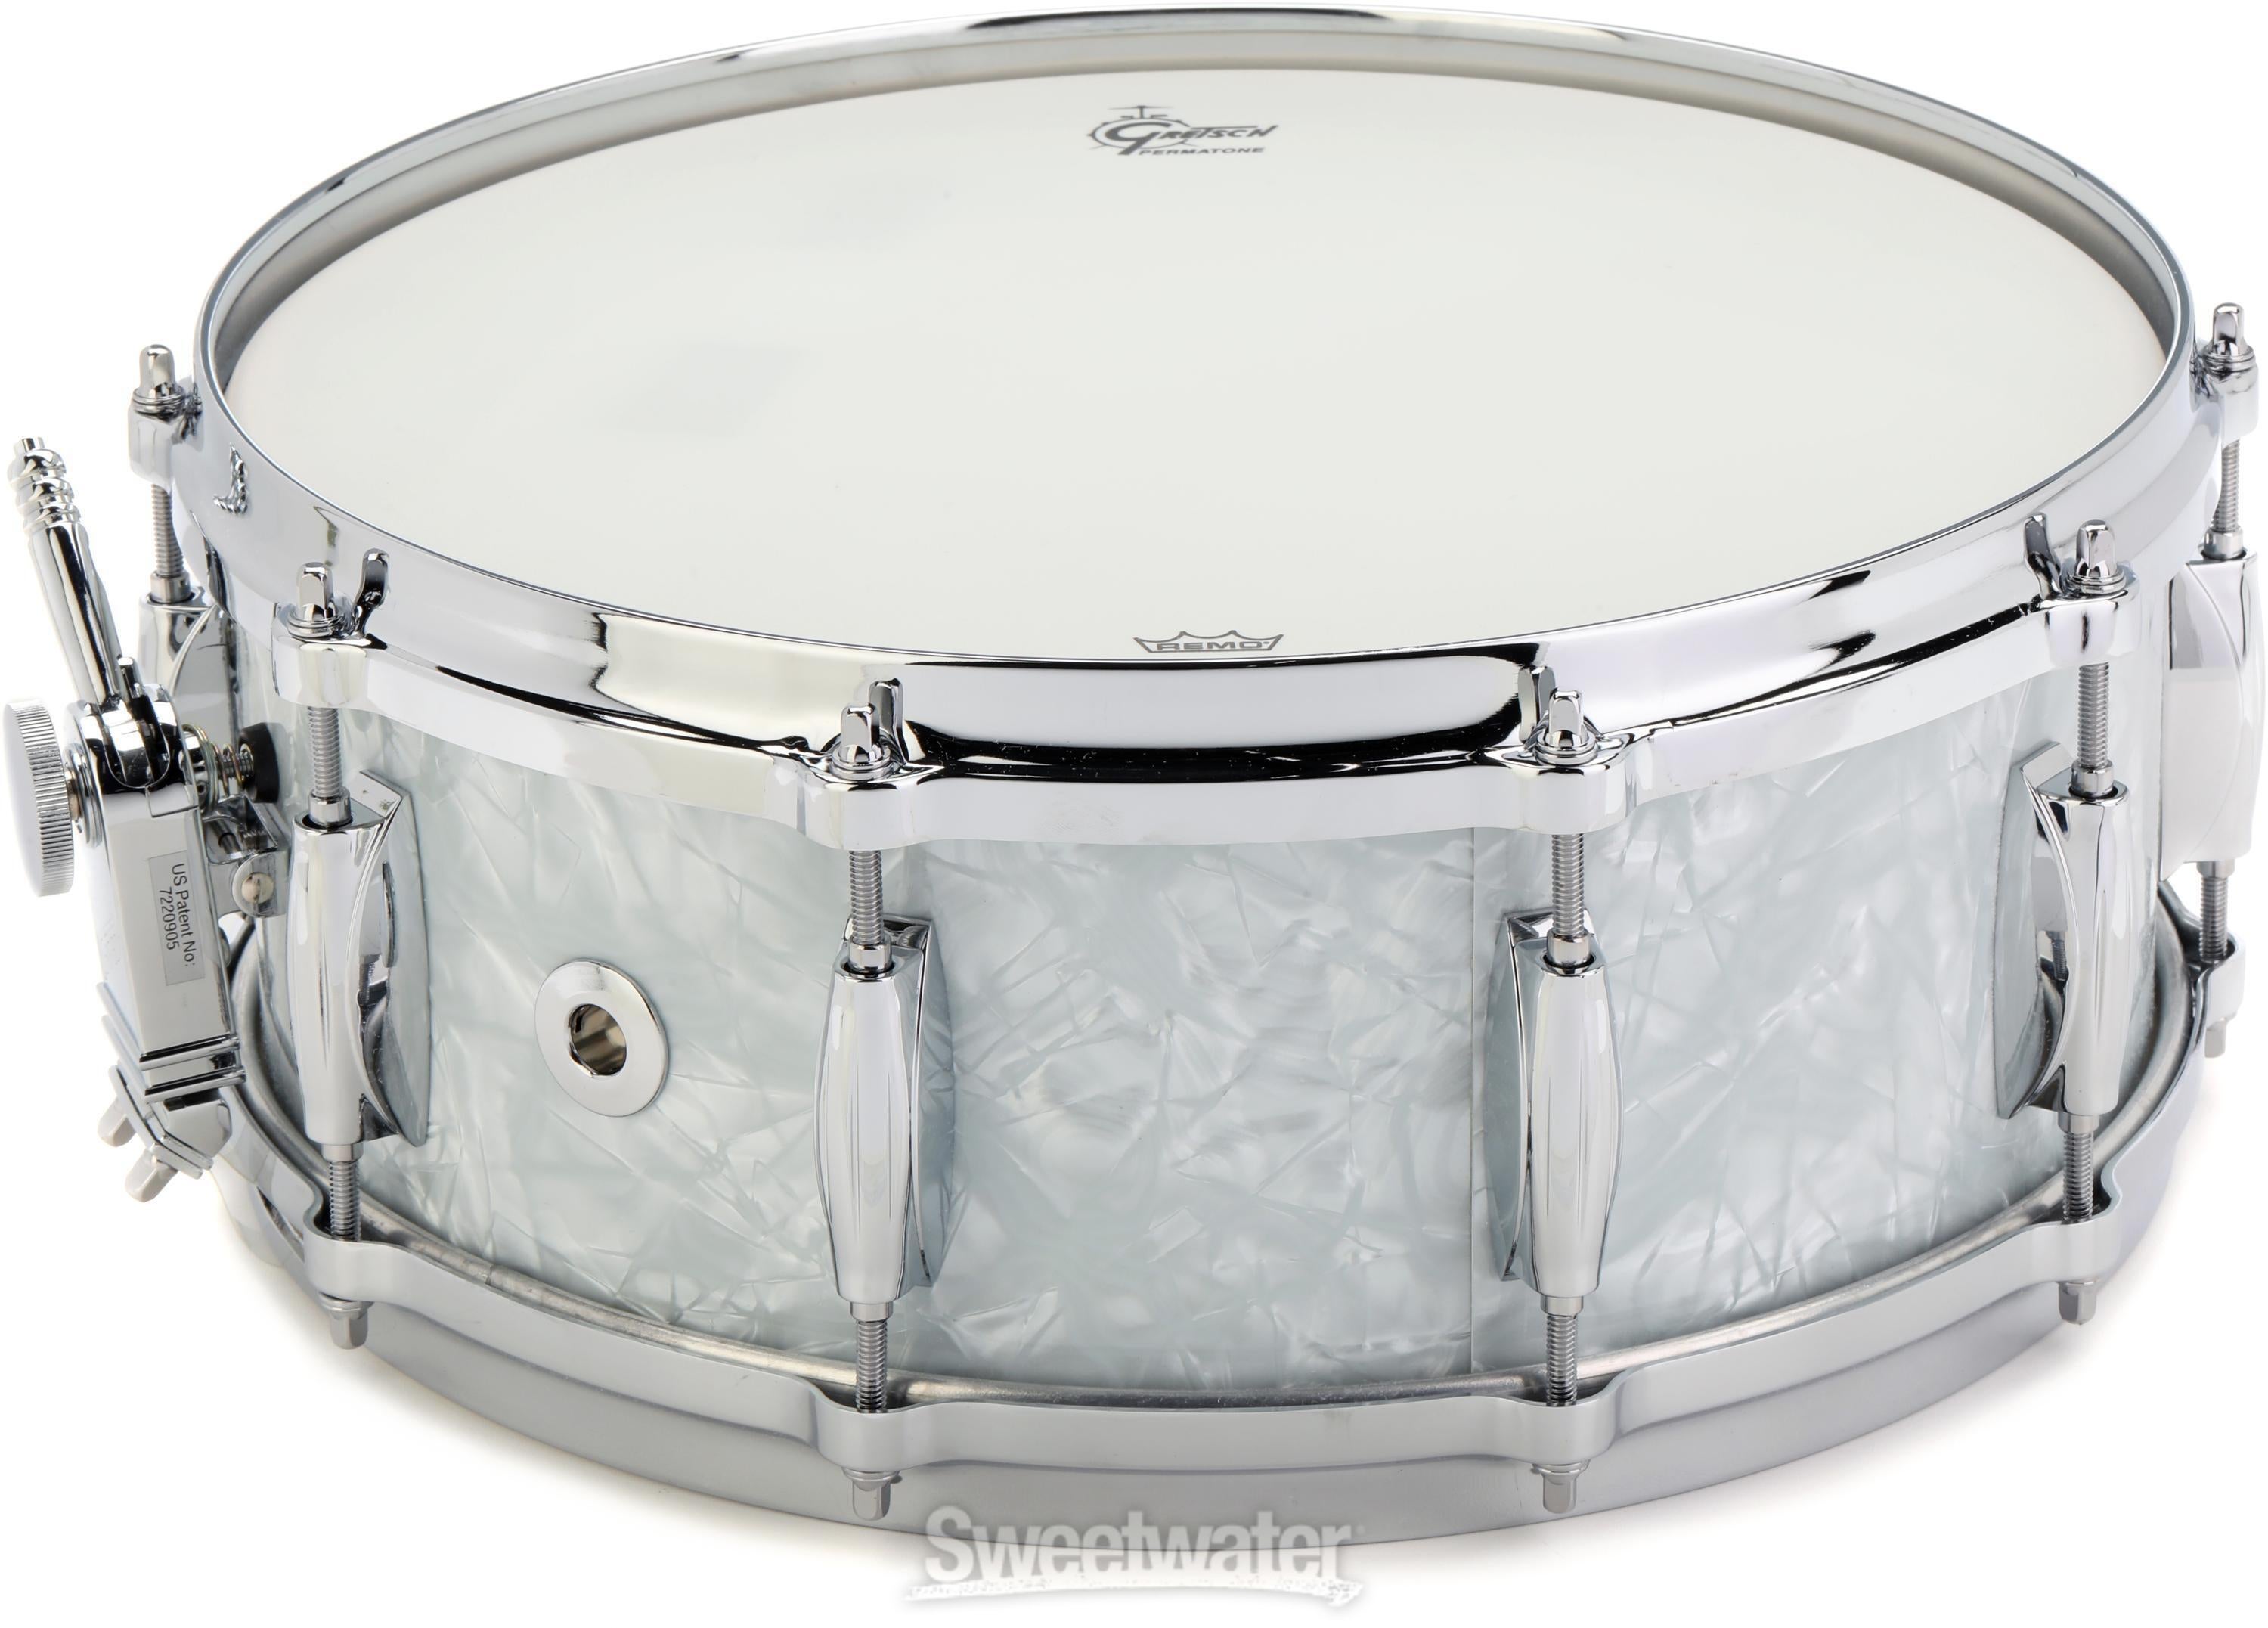 Gretsch Drums USA Custom Series Snare Drum - 5.5 x 14-inch - White Marine  Pearl